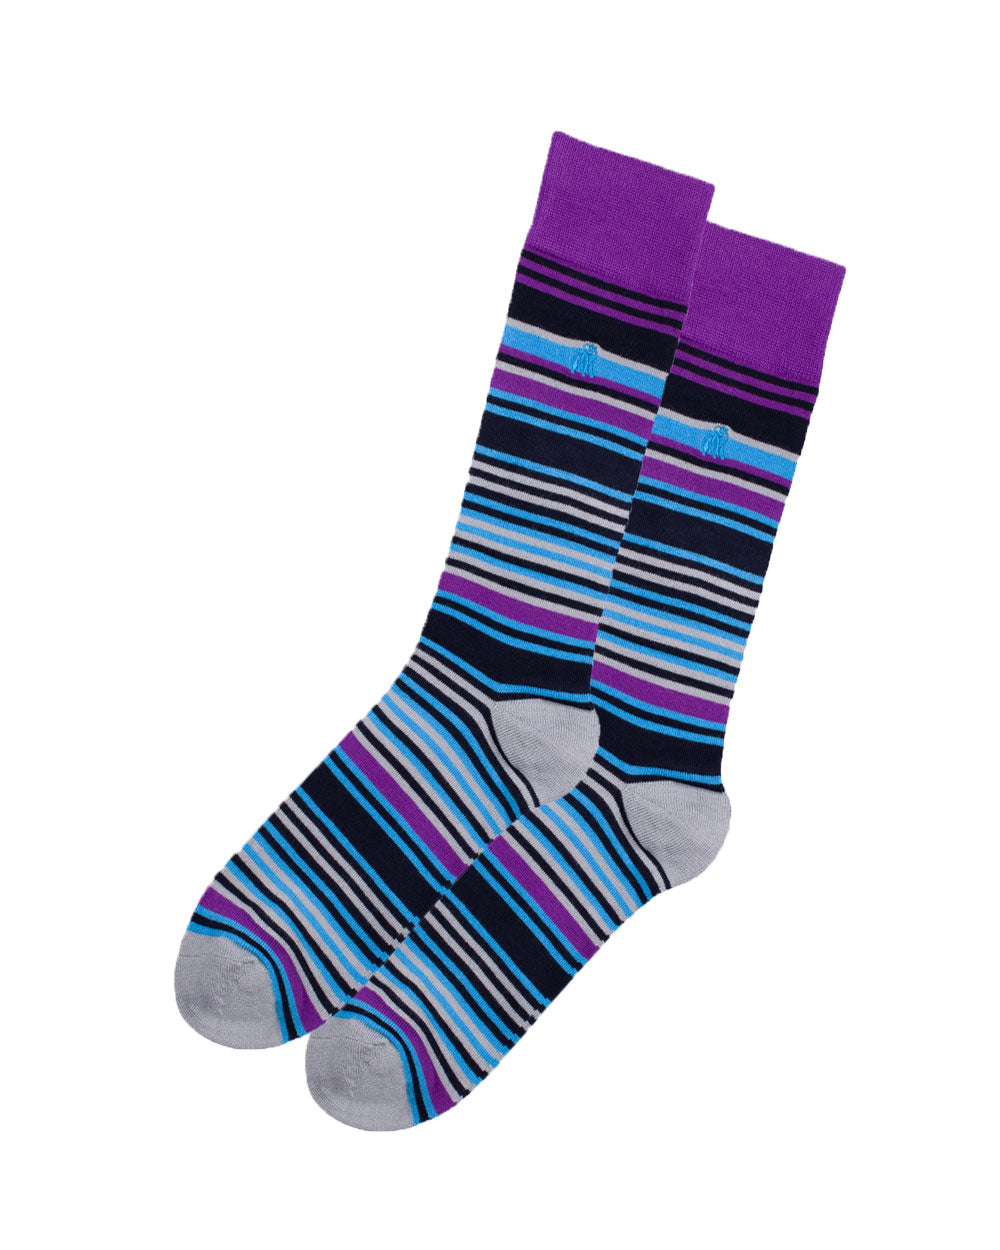 Swole Panda Bamboo Socks 1 Pair (purple/blue striped)